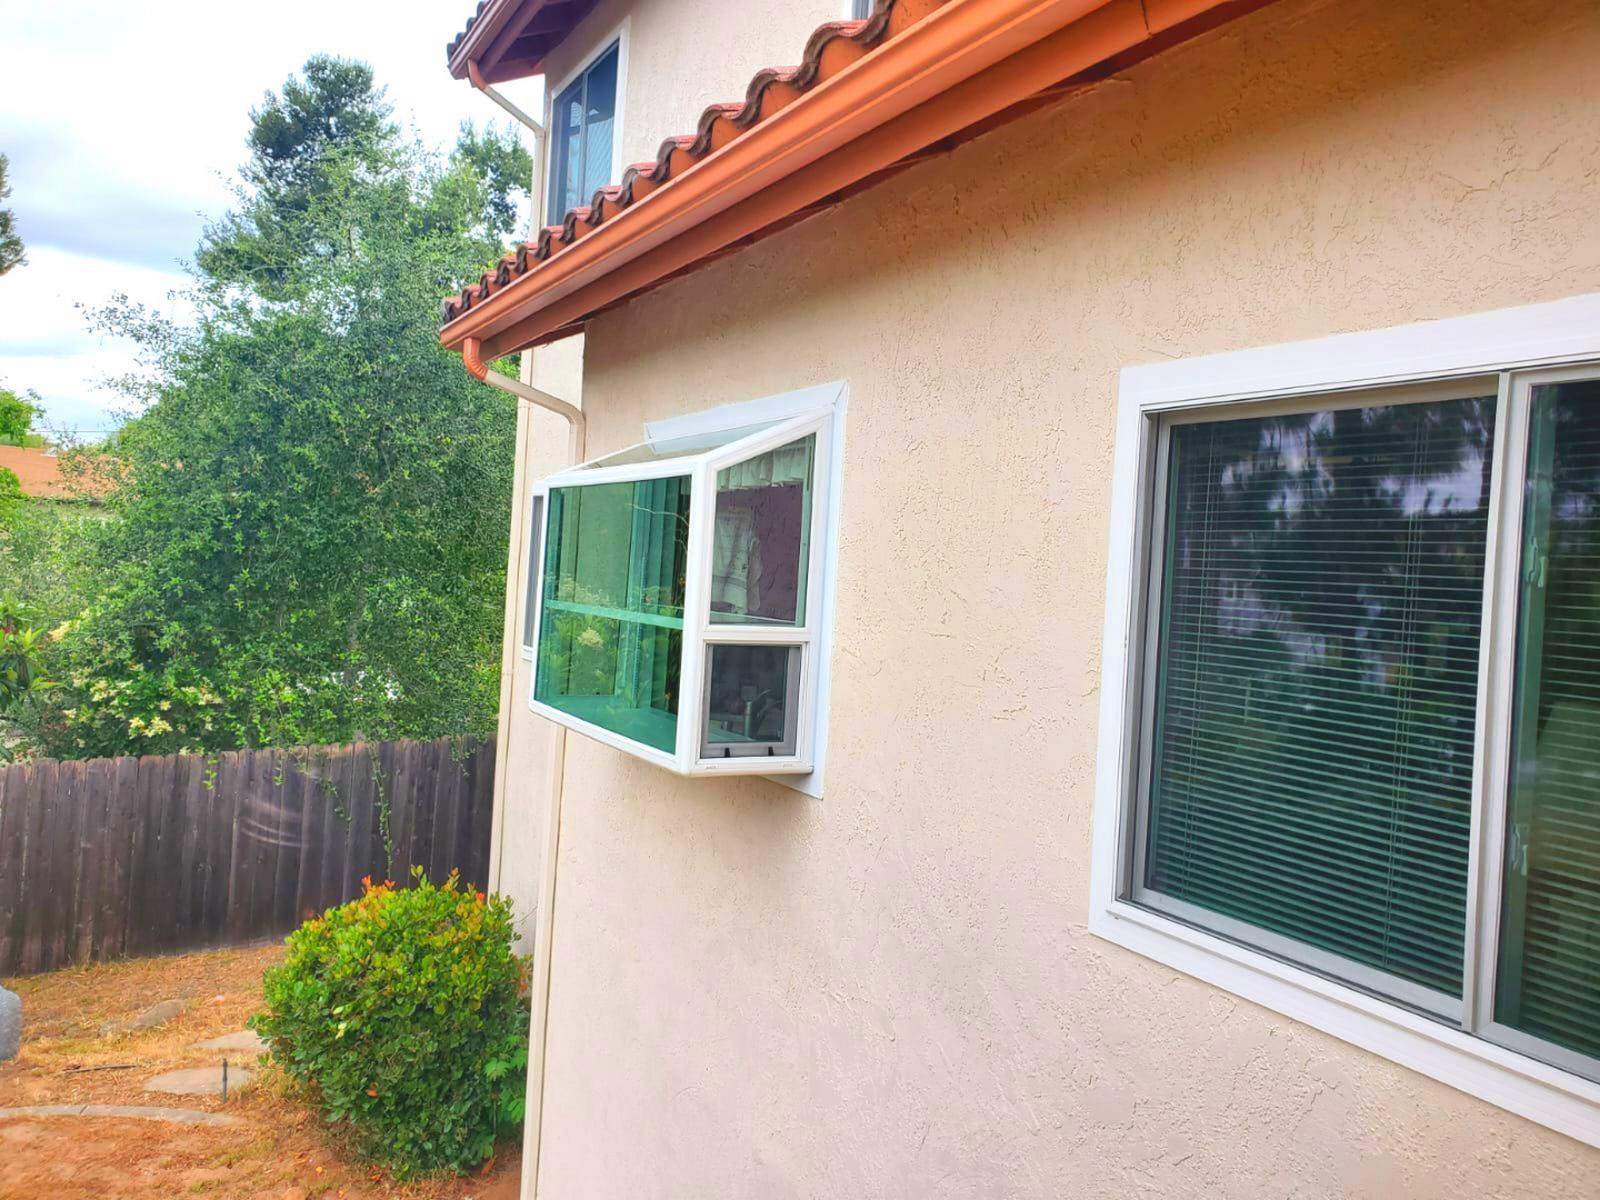 Window Replacement in La Mesa, CA 91941